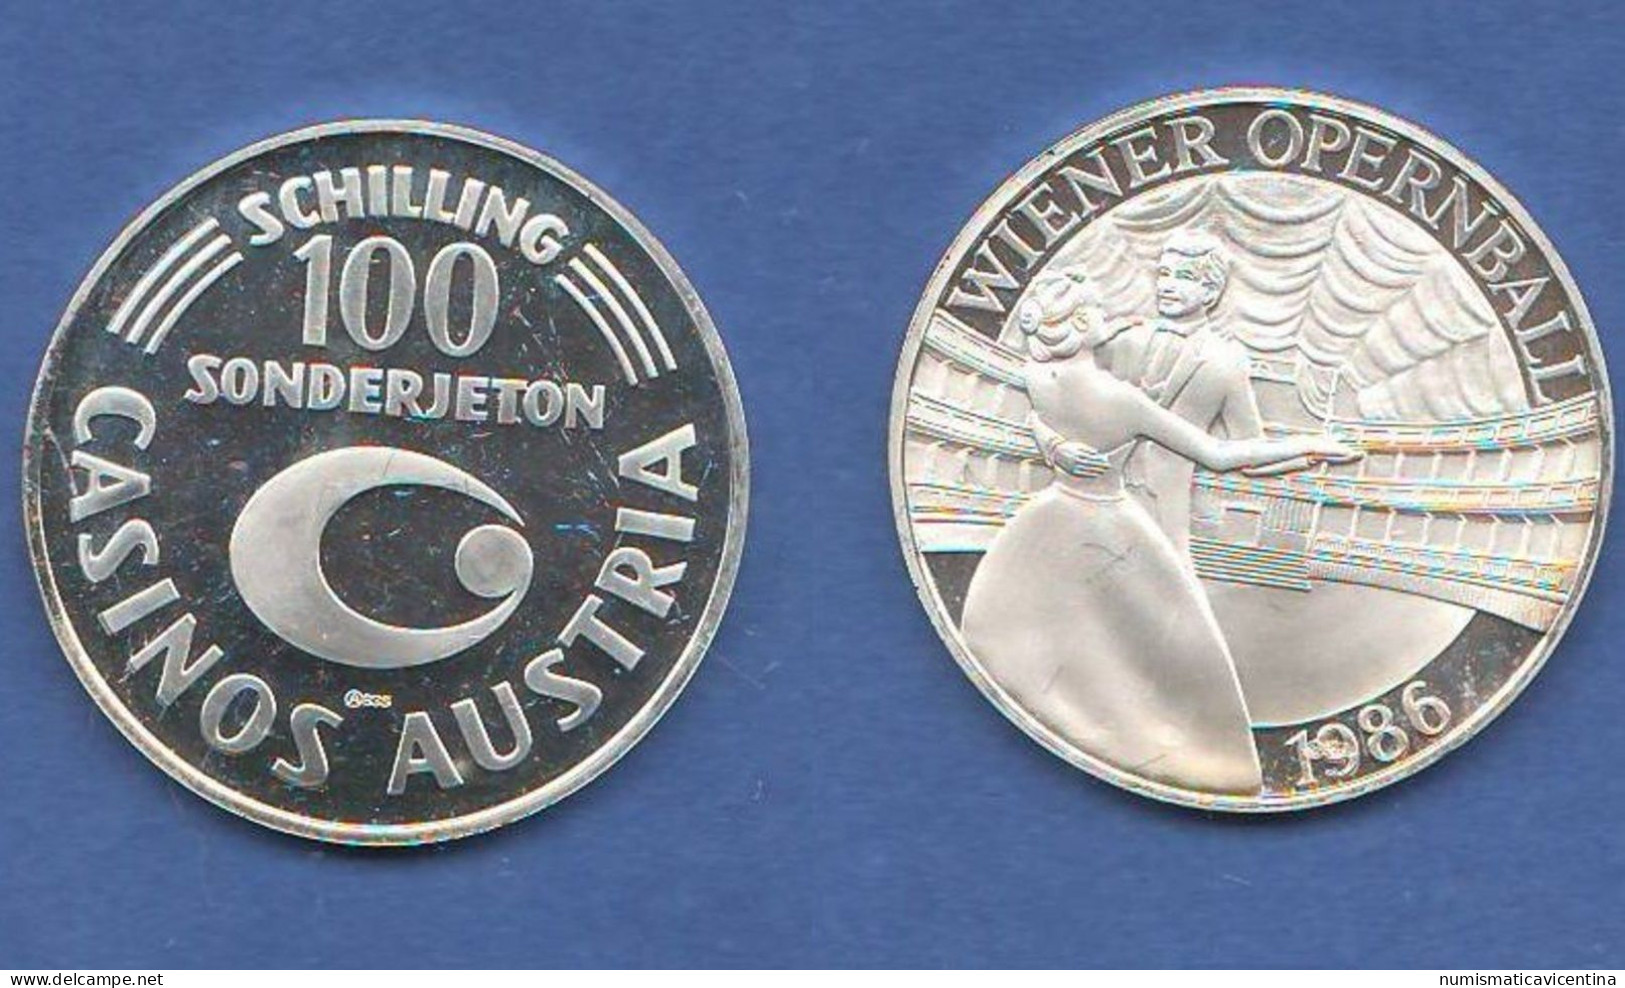 Austria Shilling 100 Schilling 1986 Silver Token Österreich  " Wiener Opernball " Casino Jeton - Casino